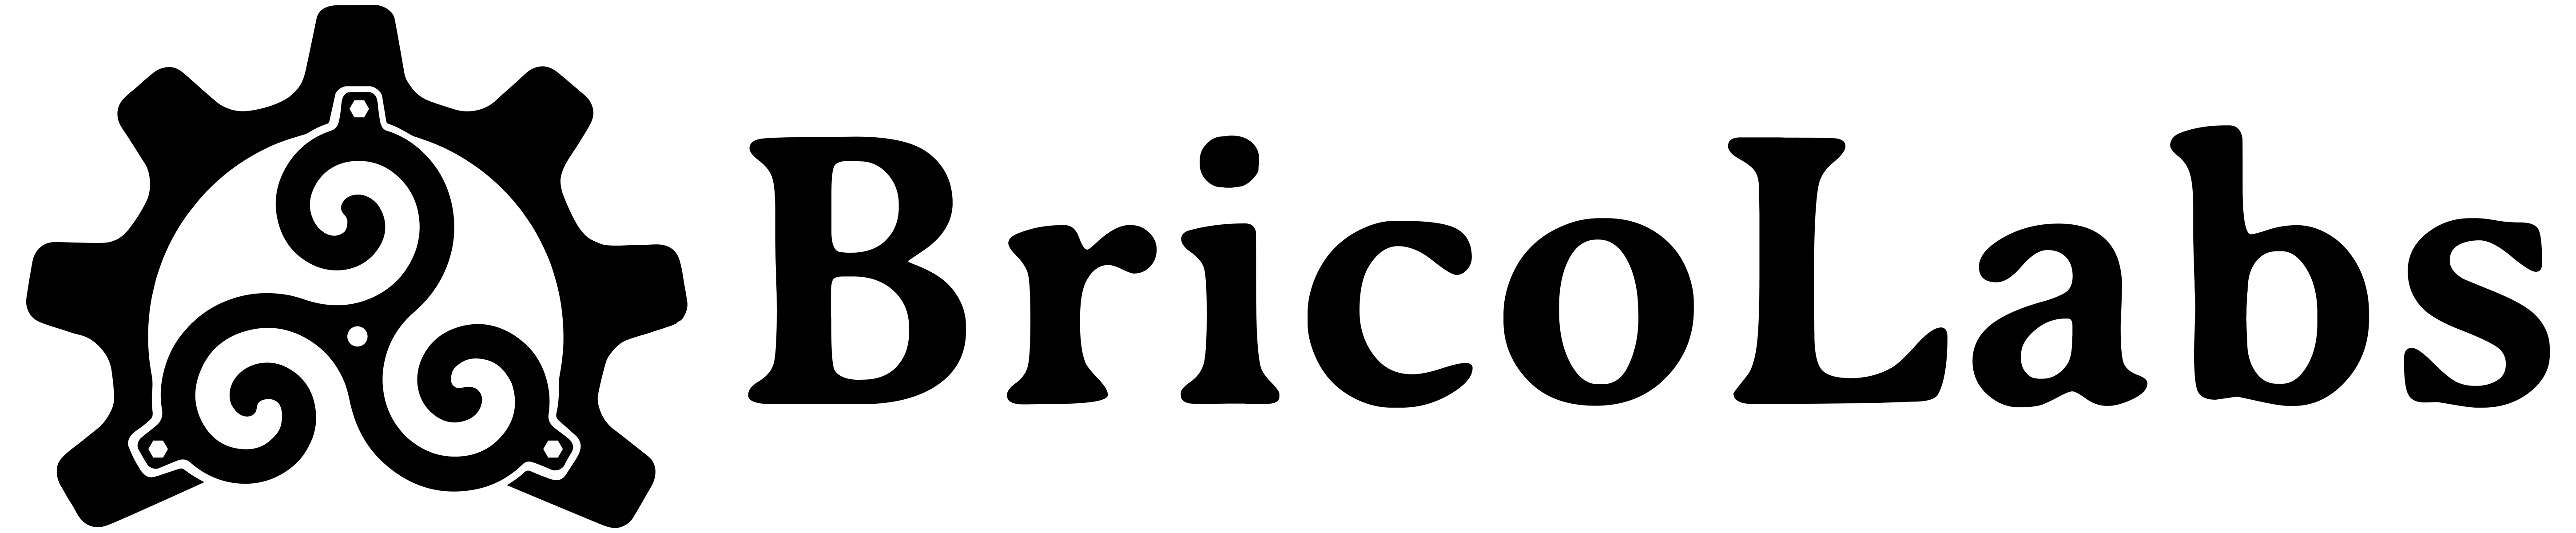 Bricolabs logo landscape.jpg